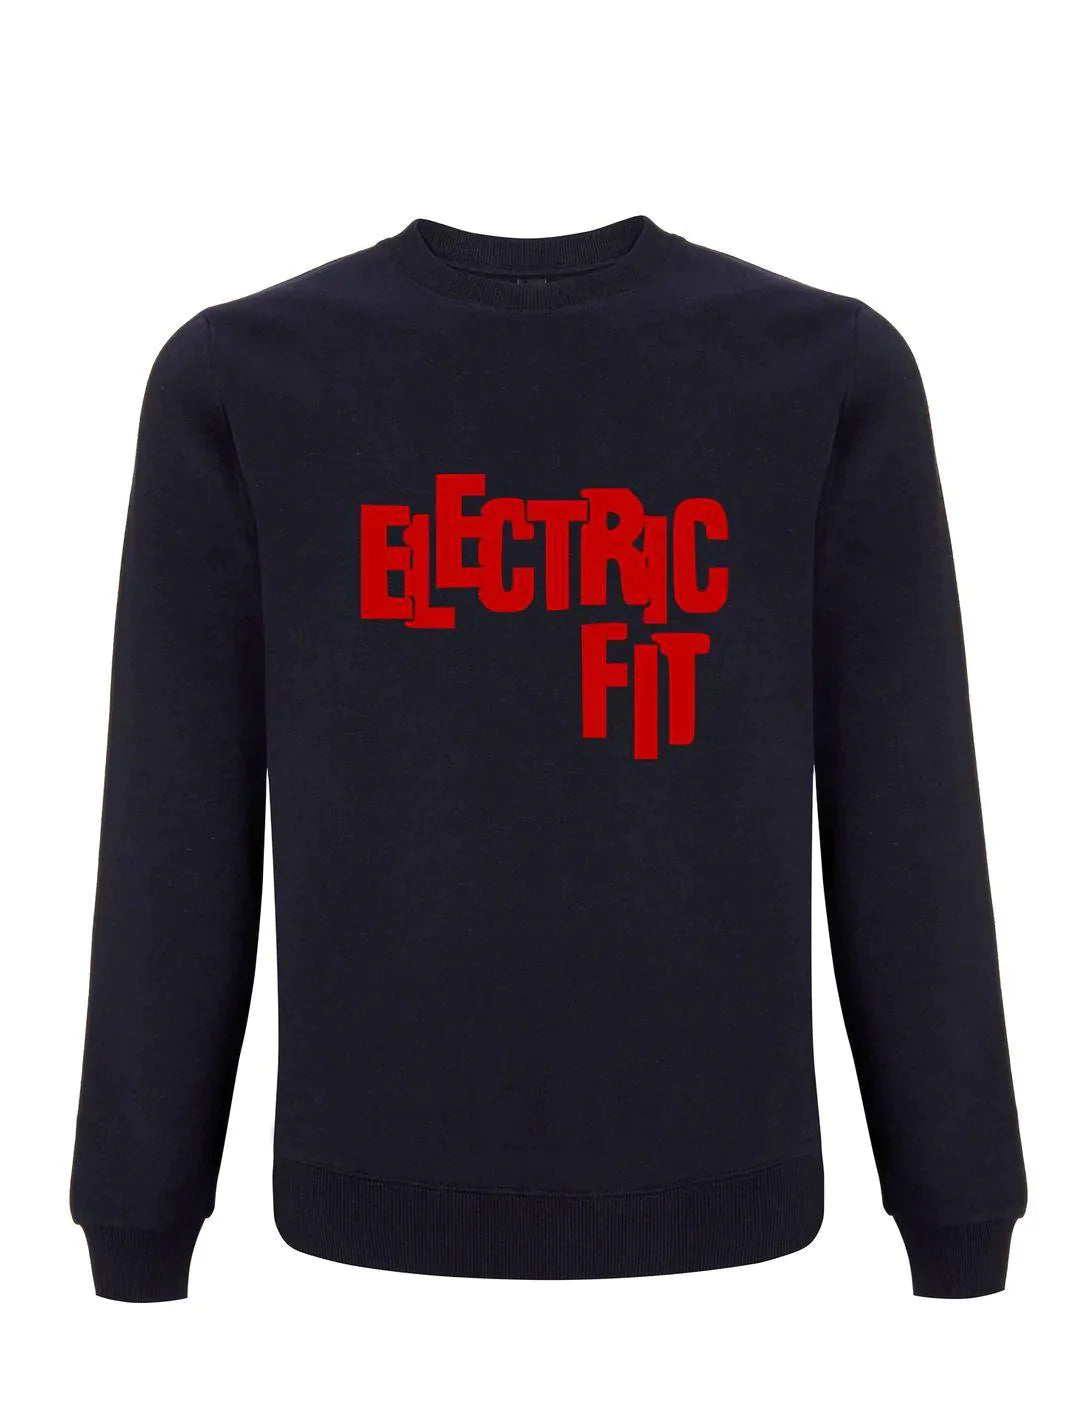 THE PRISONERS : Electric Fit Sweatshirt Official Merchandise (Many Colours) - SOUND IS COLOUR